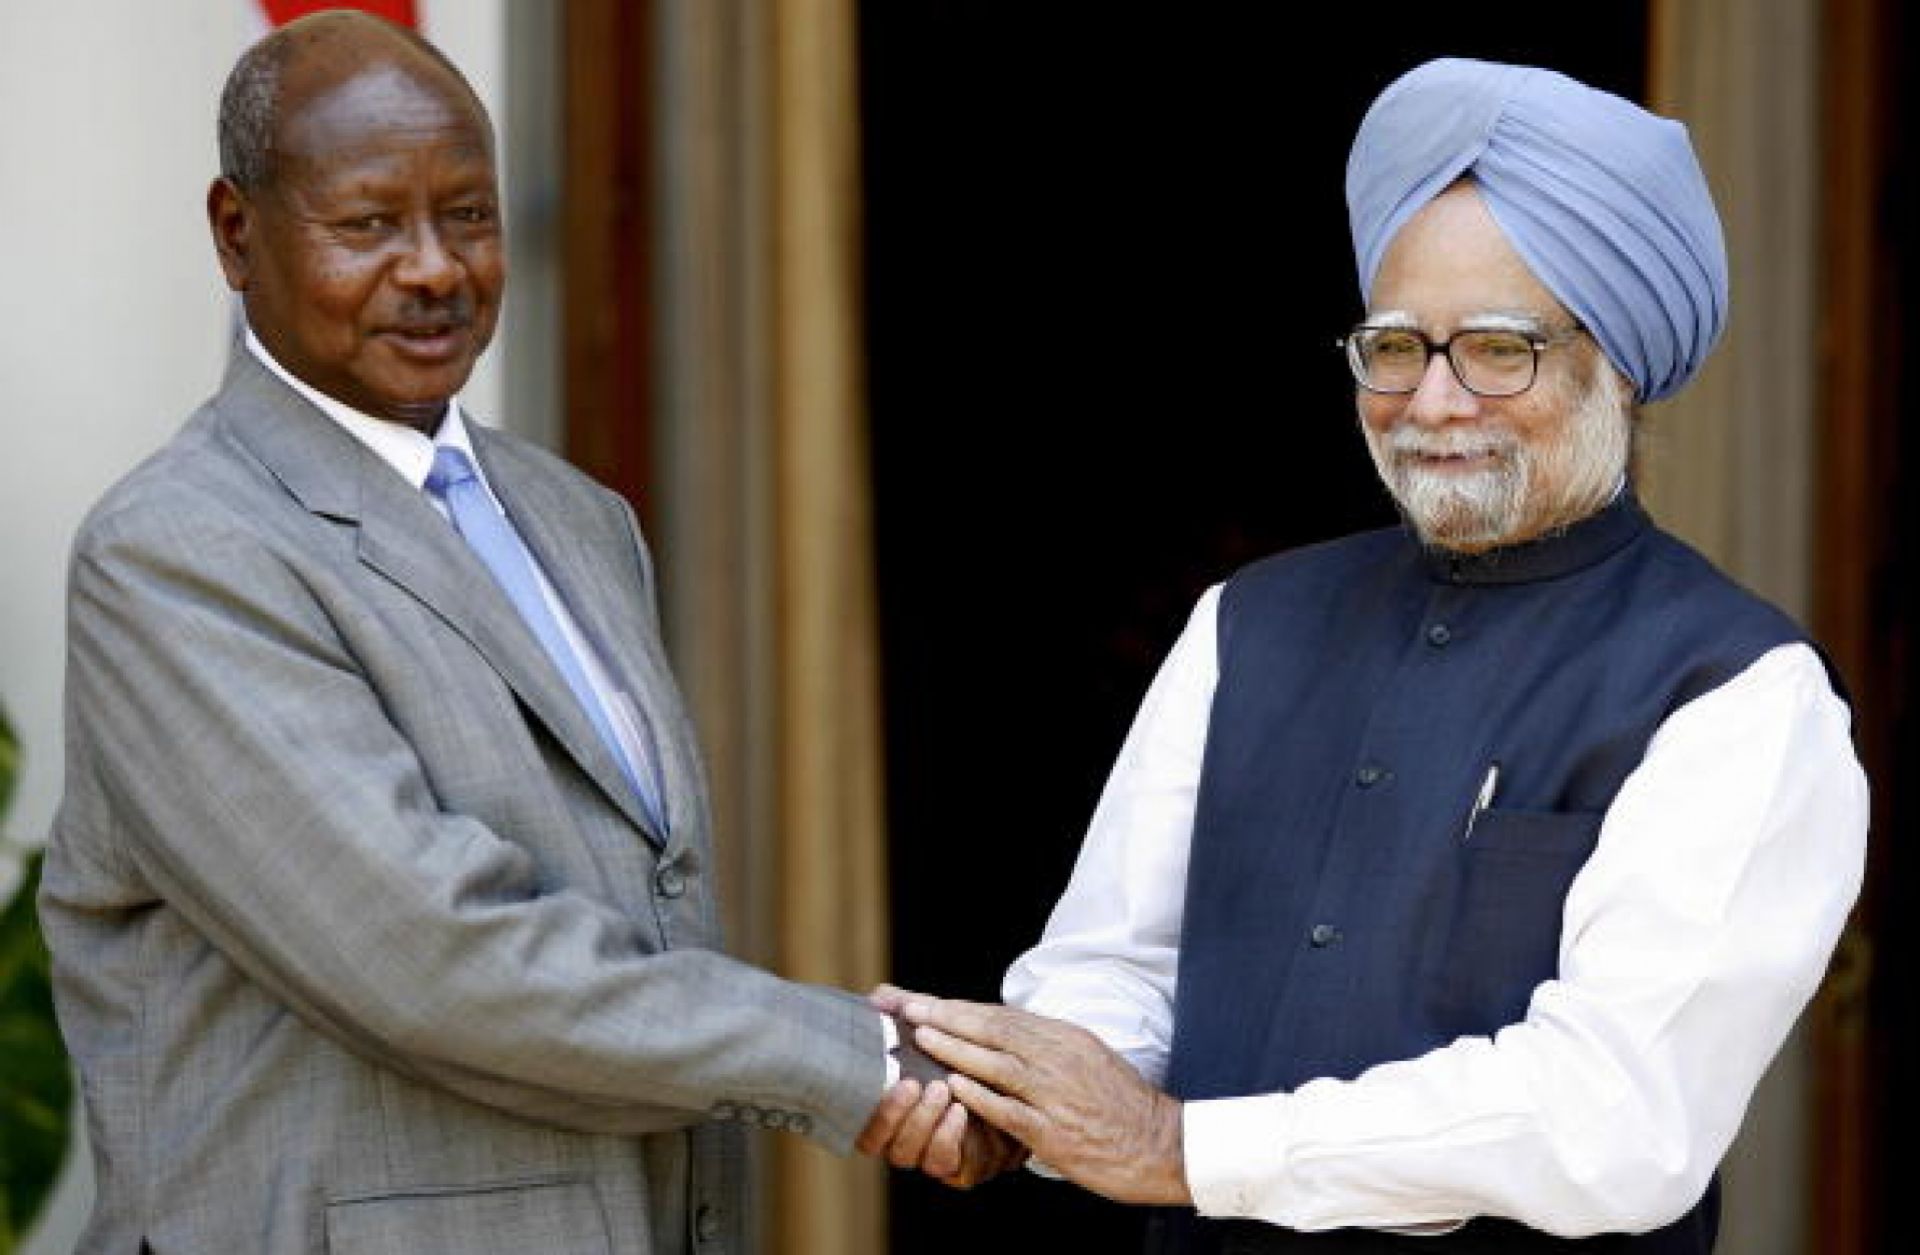 Ugandan President Yoweru Kaguta Museveni (L) and Indian Prime Minister Manmohan Singh in New Delhi